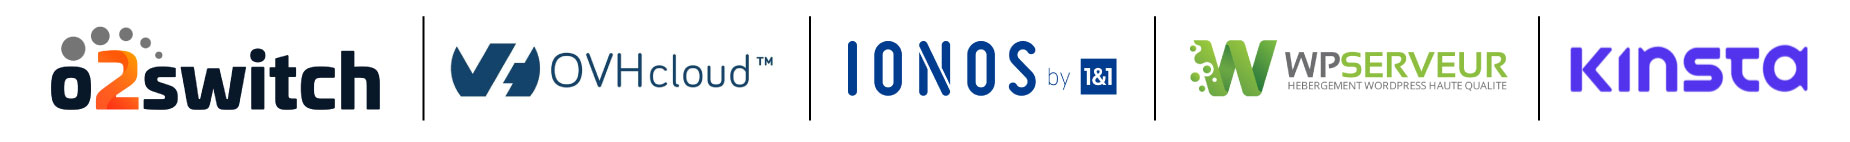 logo hebergeur wordpress